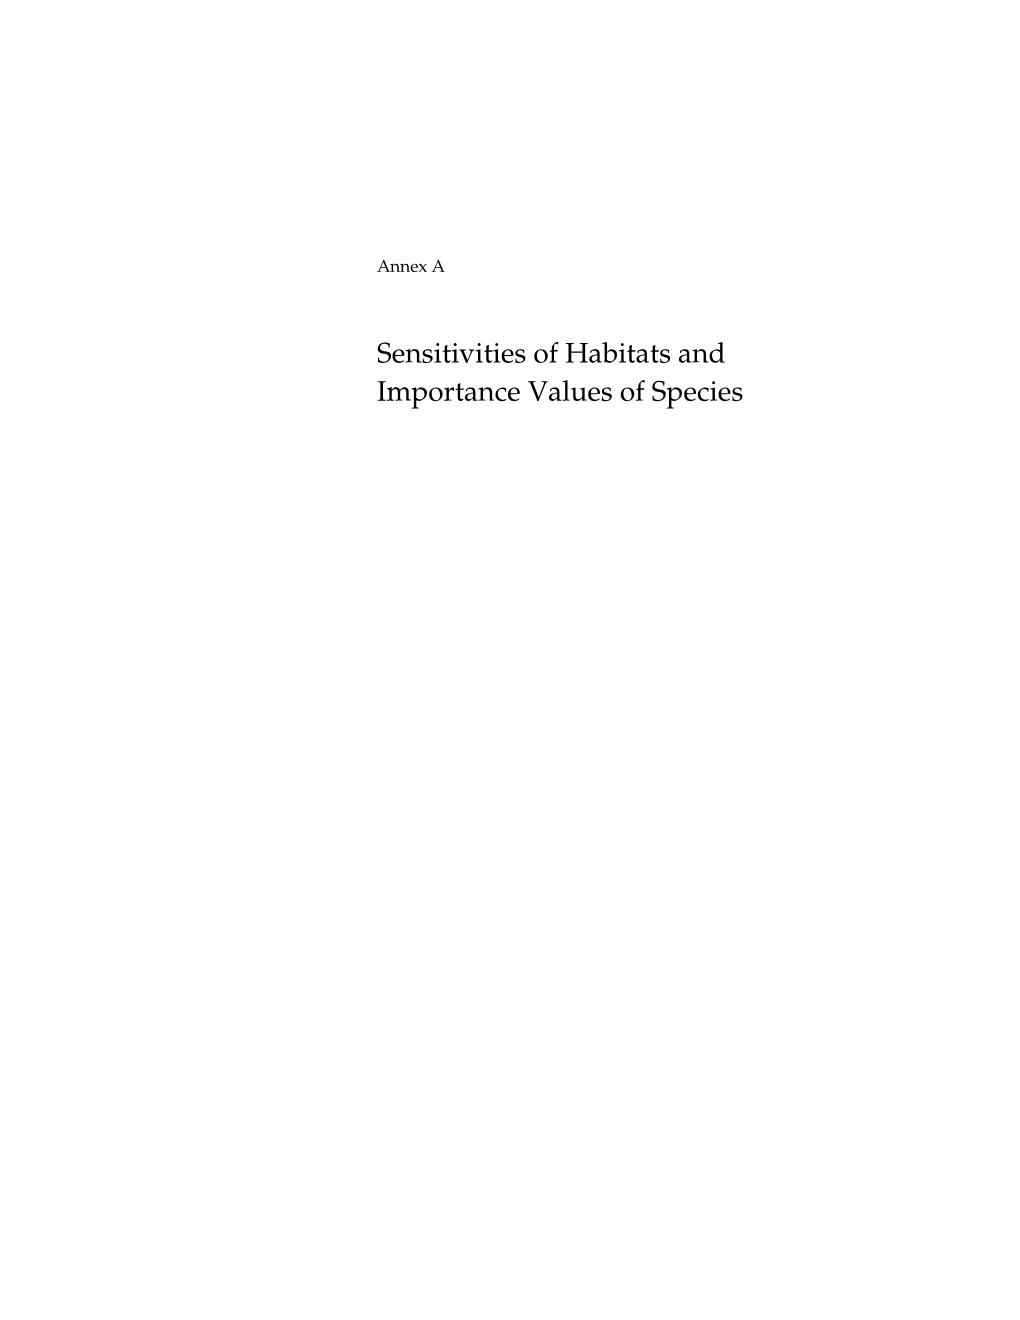 Sensitivities of Habitats and Importance Values of Species